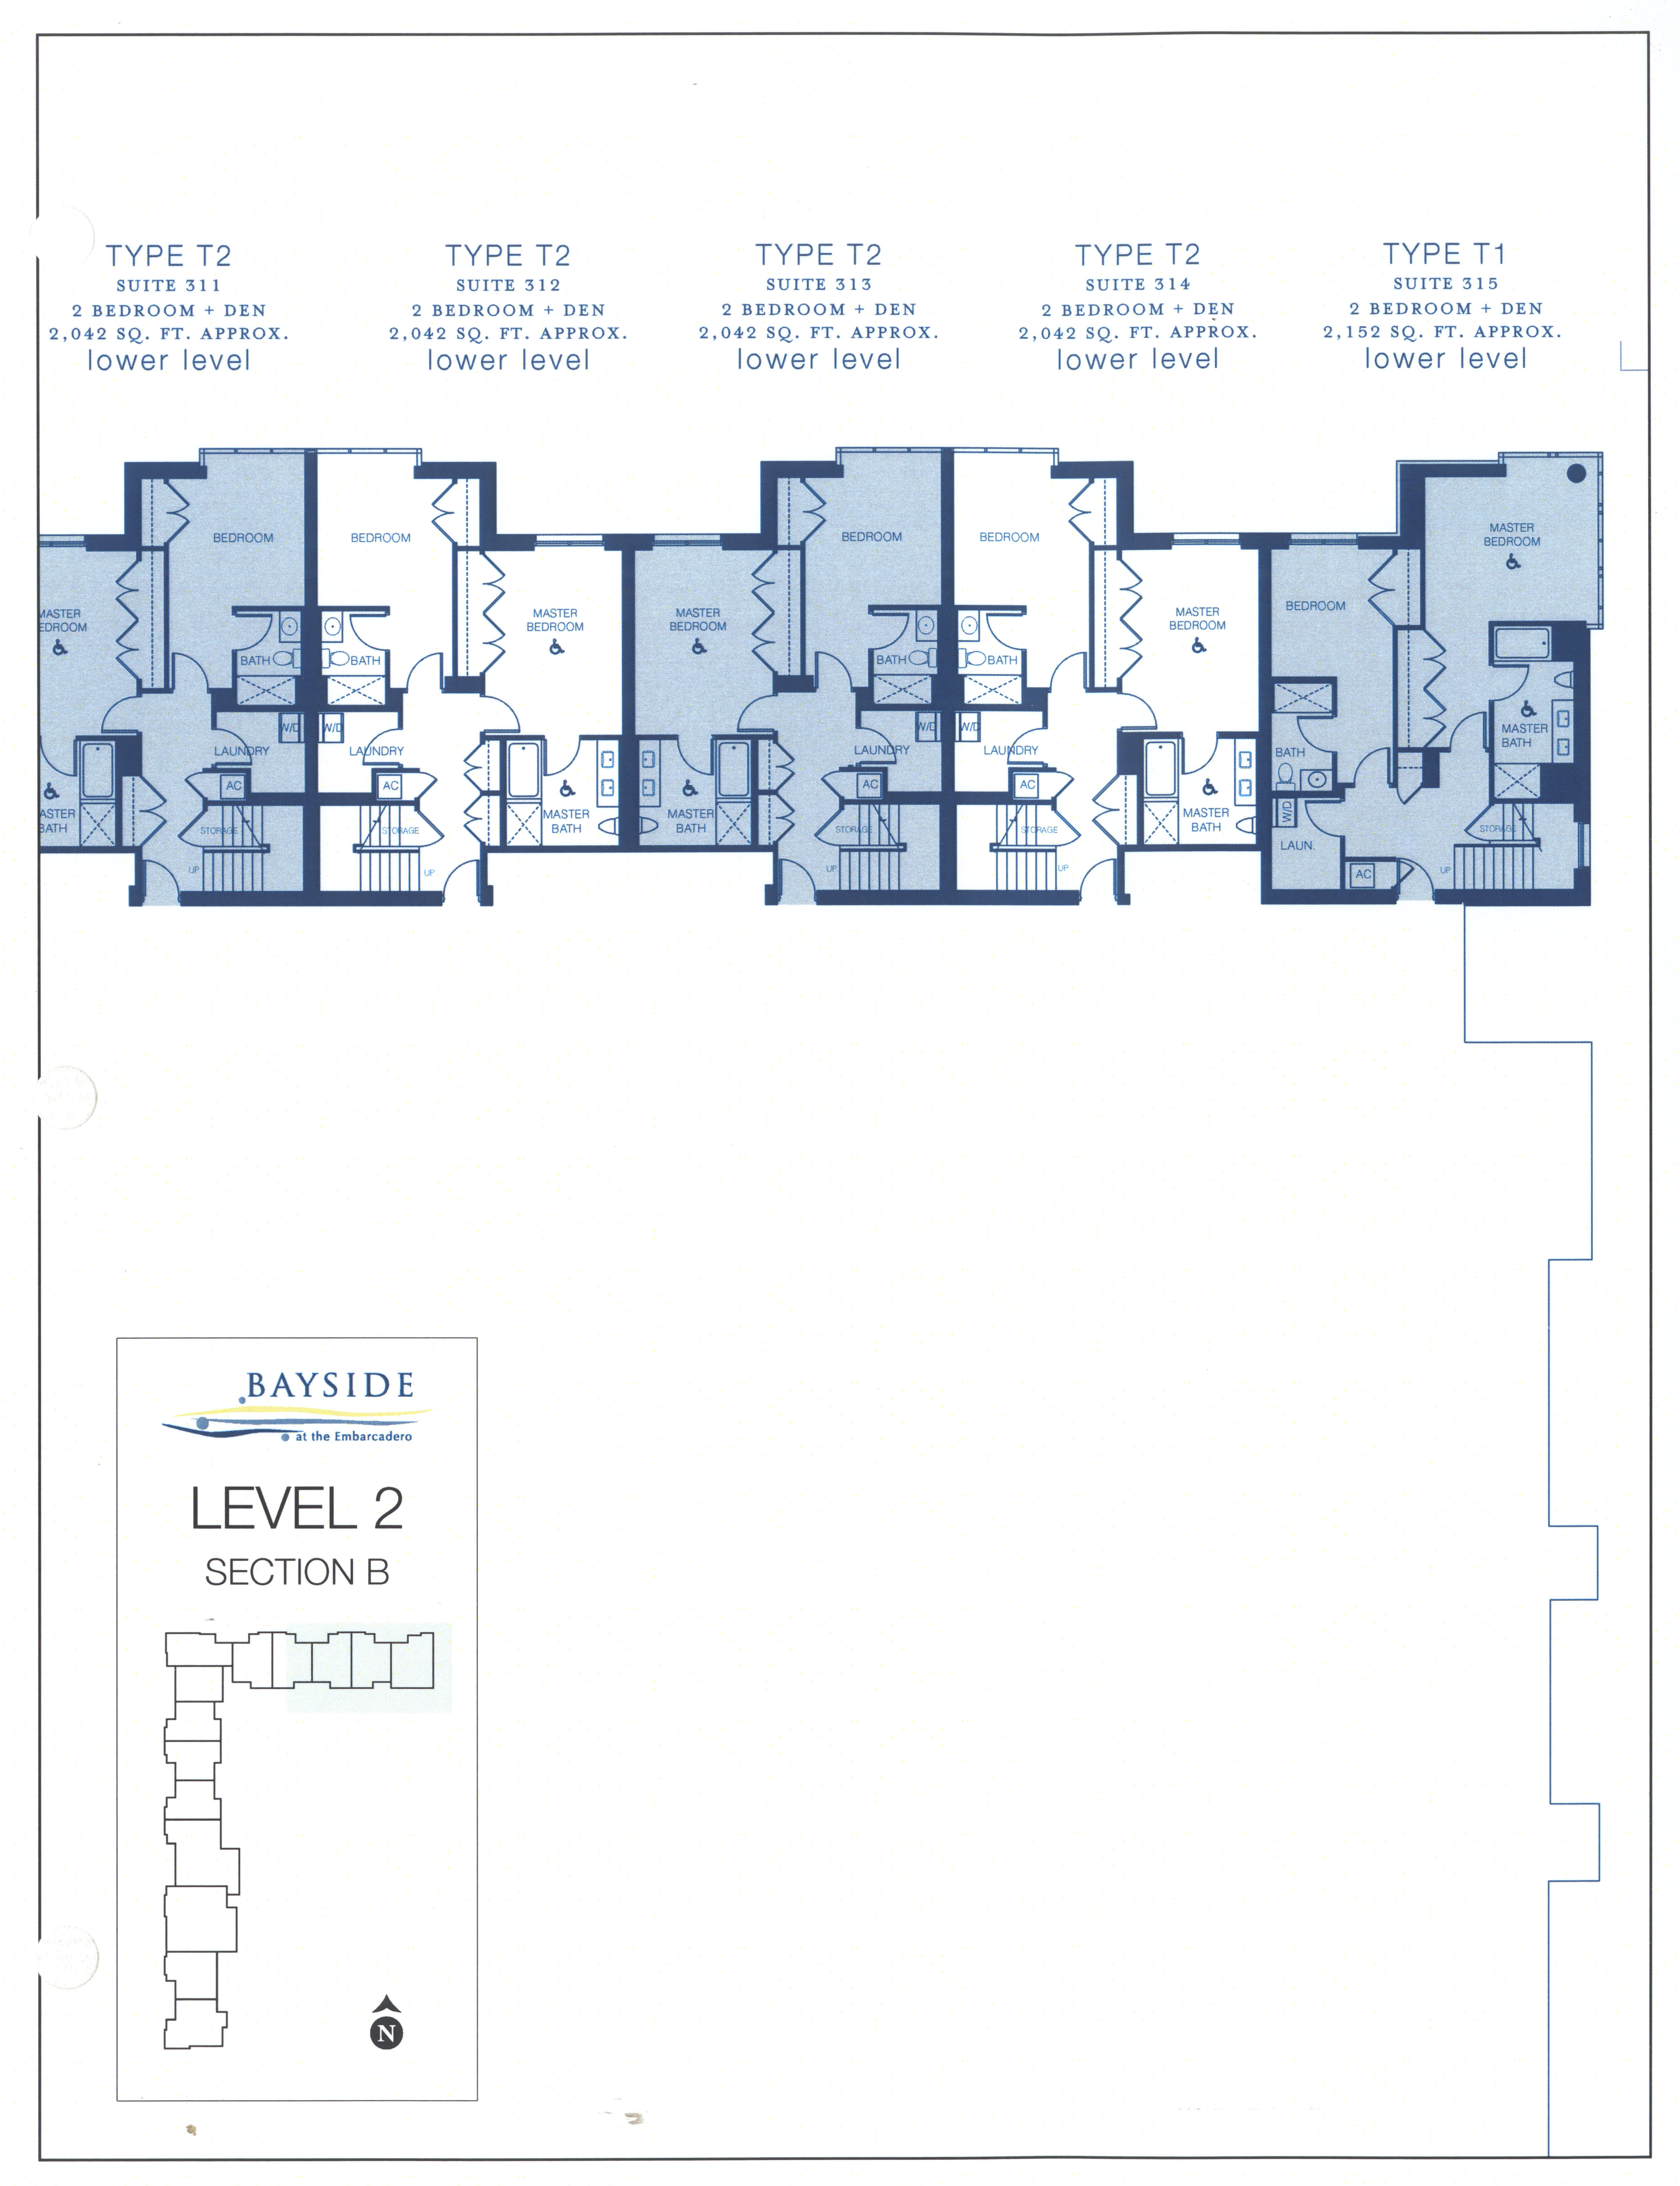 Bayside Floor Plan Level 2 Section B